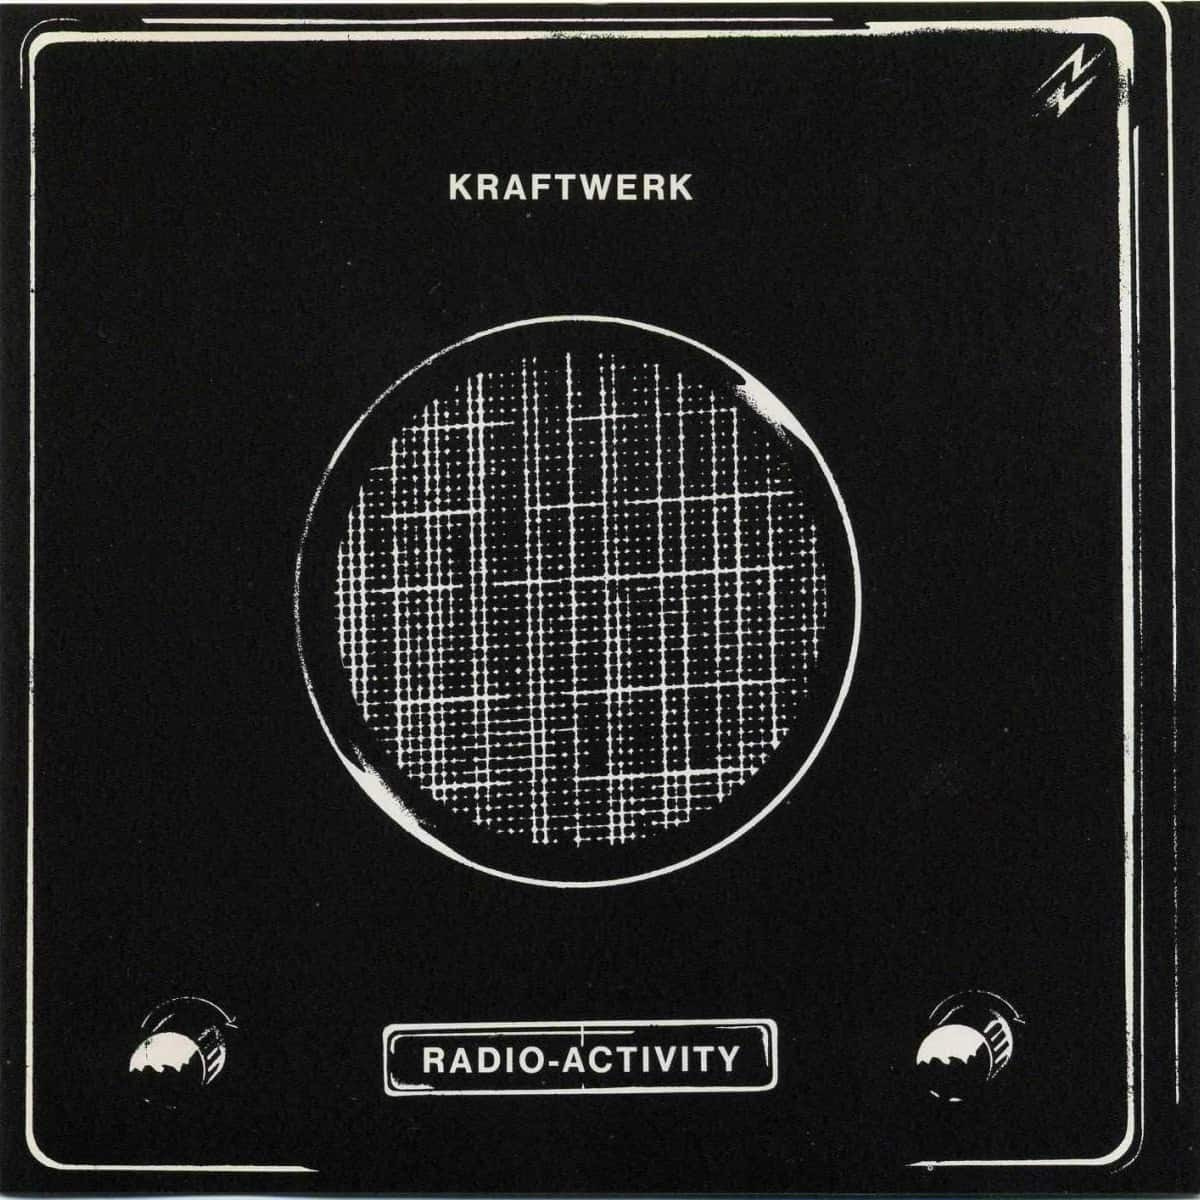 Kraftwerk: Radio-Activity Vinyl & CD. Norman Records UK